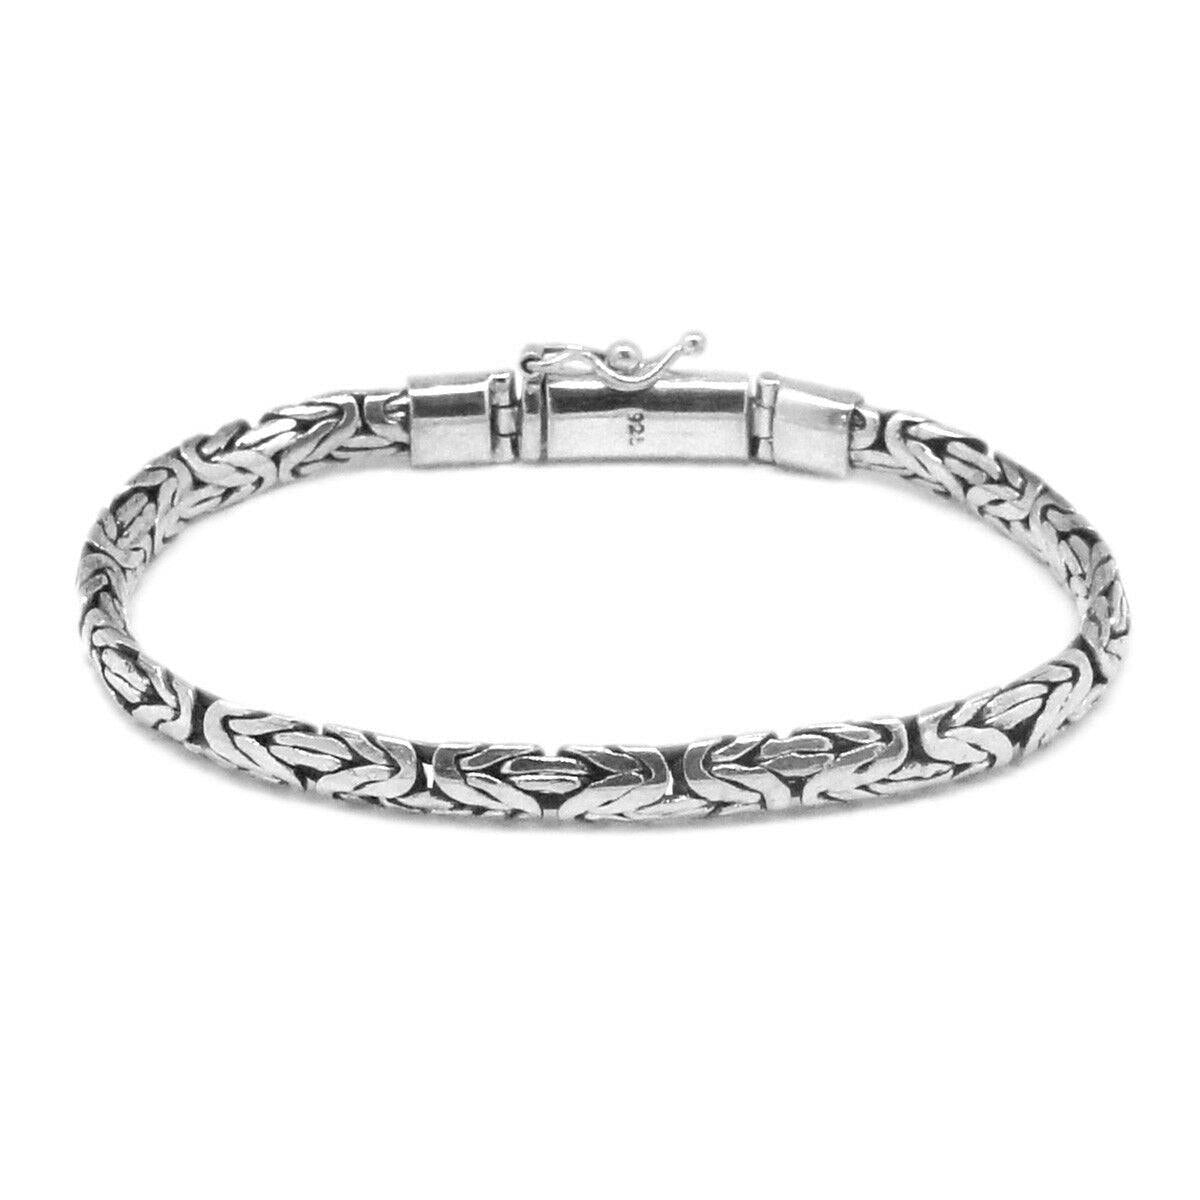 Bali Sterling Silver Byzantine Chain Bracelet